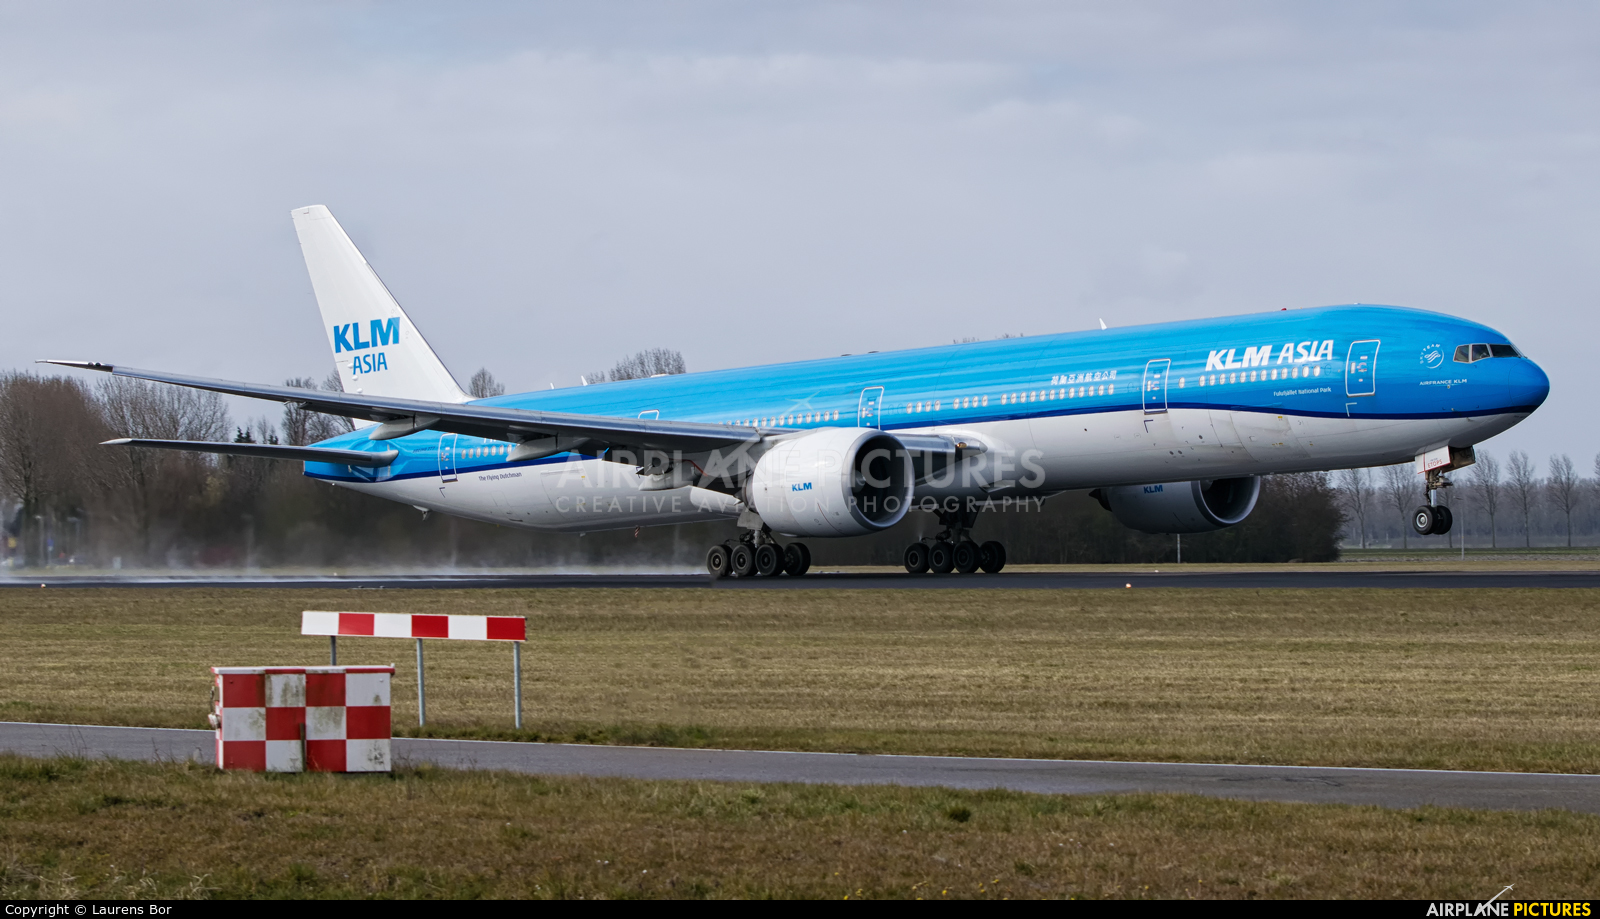 KLM Asia PH-BVB aircraft at Amsterdam - Schiphol